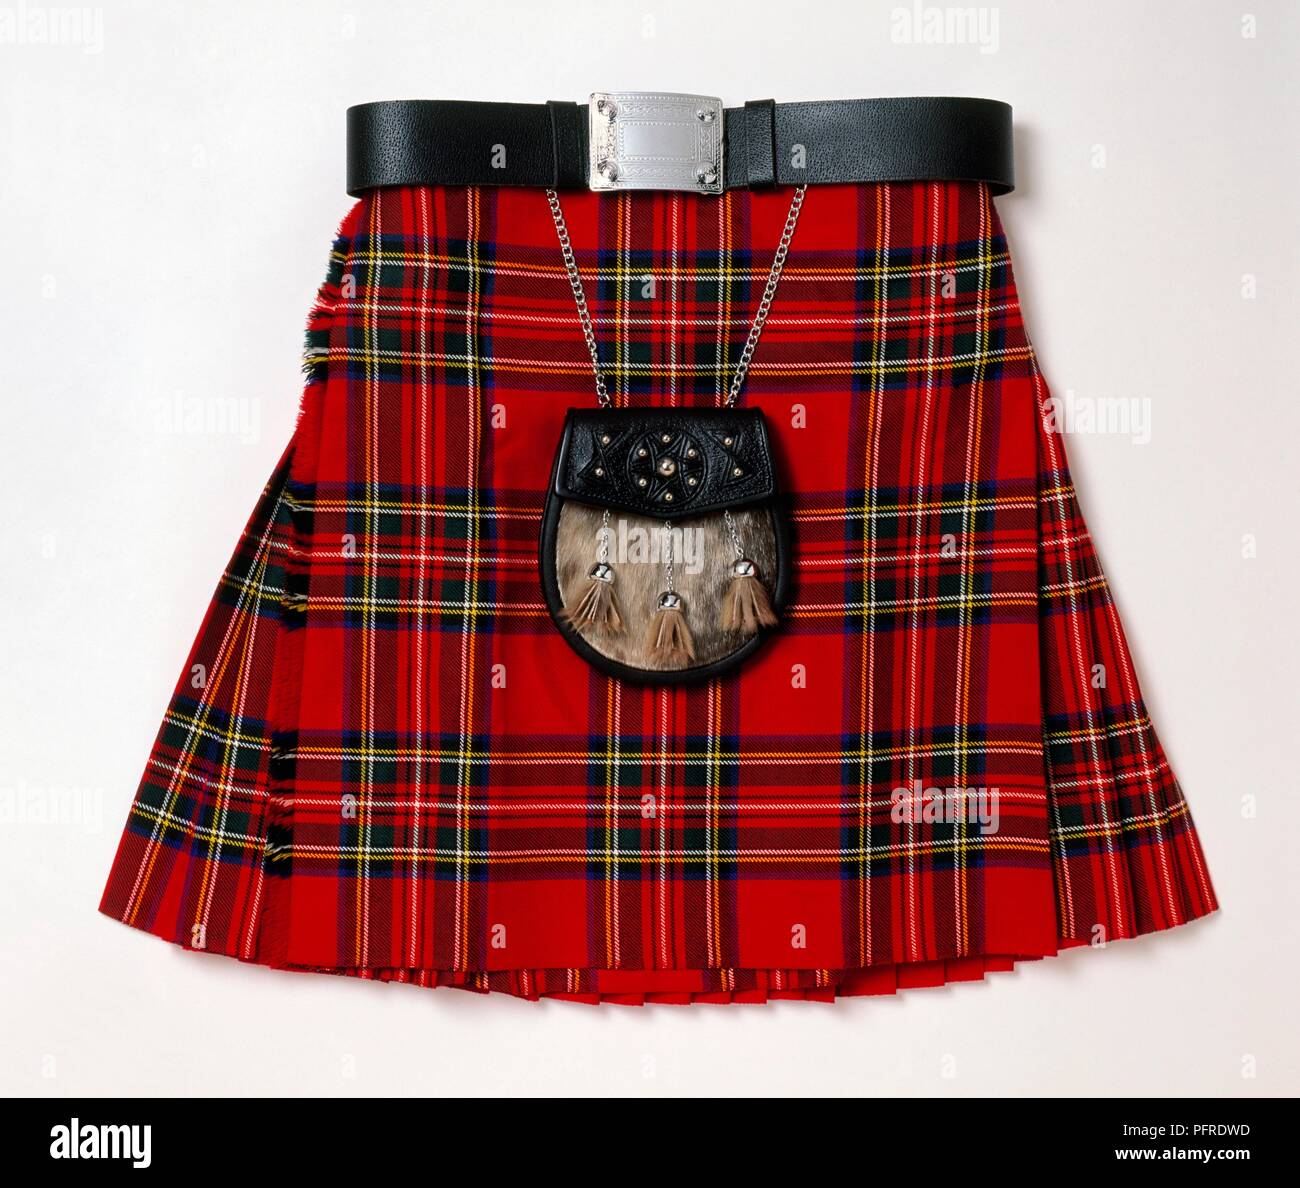 Royal Stewart Tartan kilt with sporran attached to belt Stock Photo